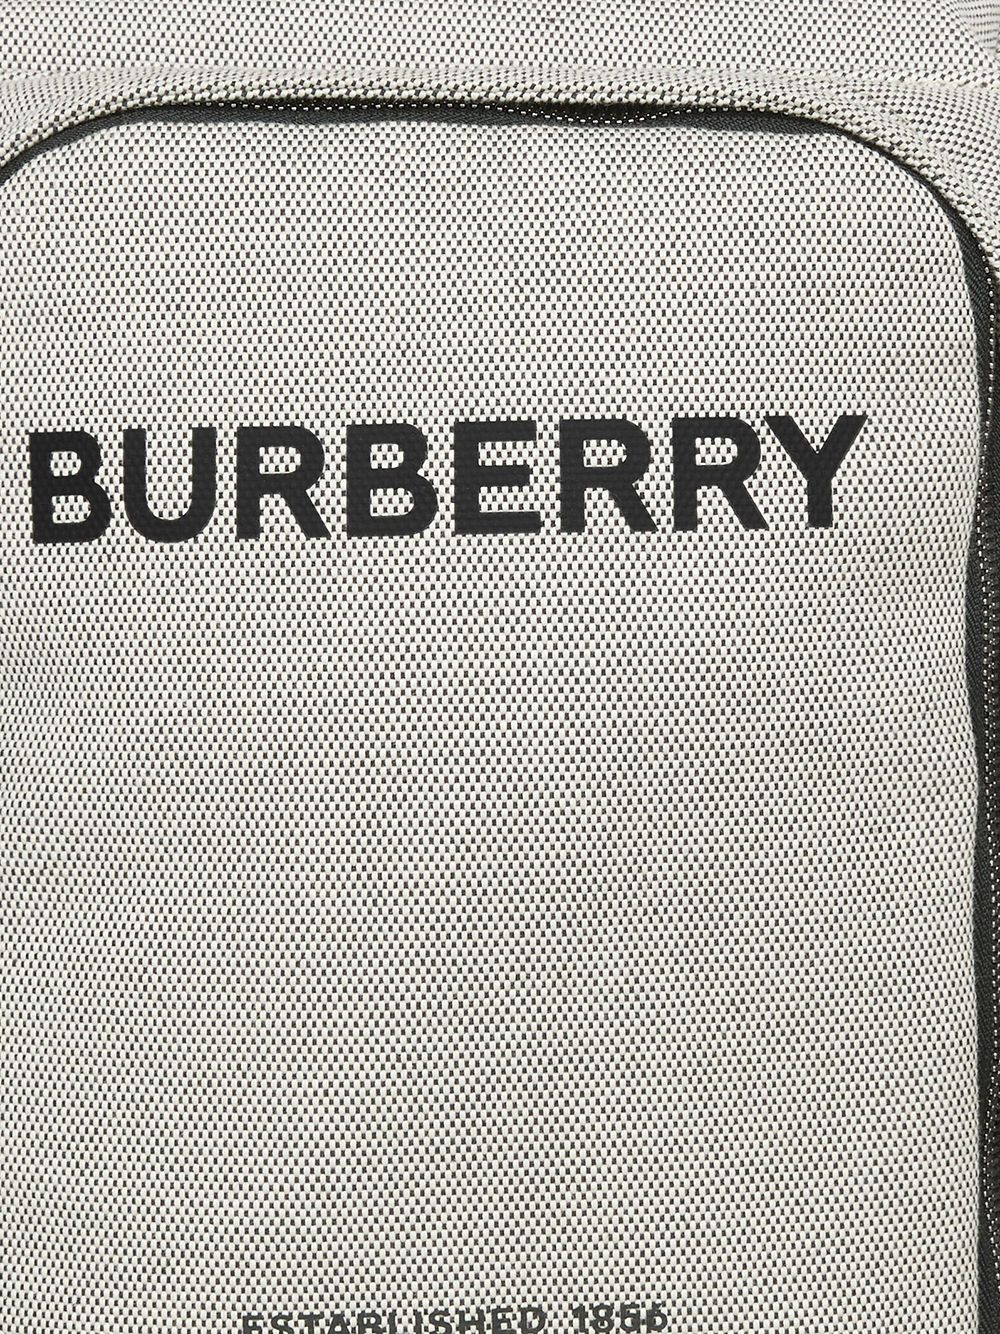 фото Burberry рюкзак с логотипом